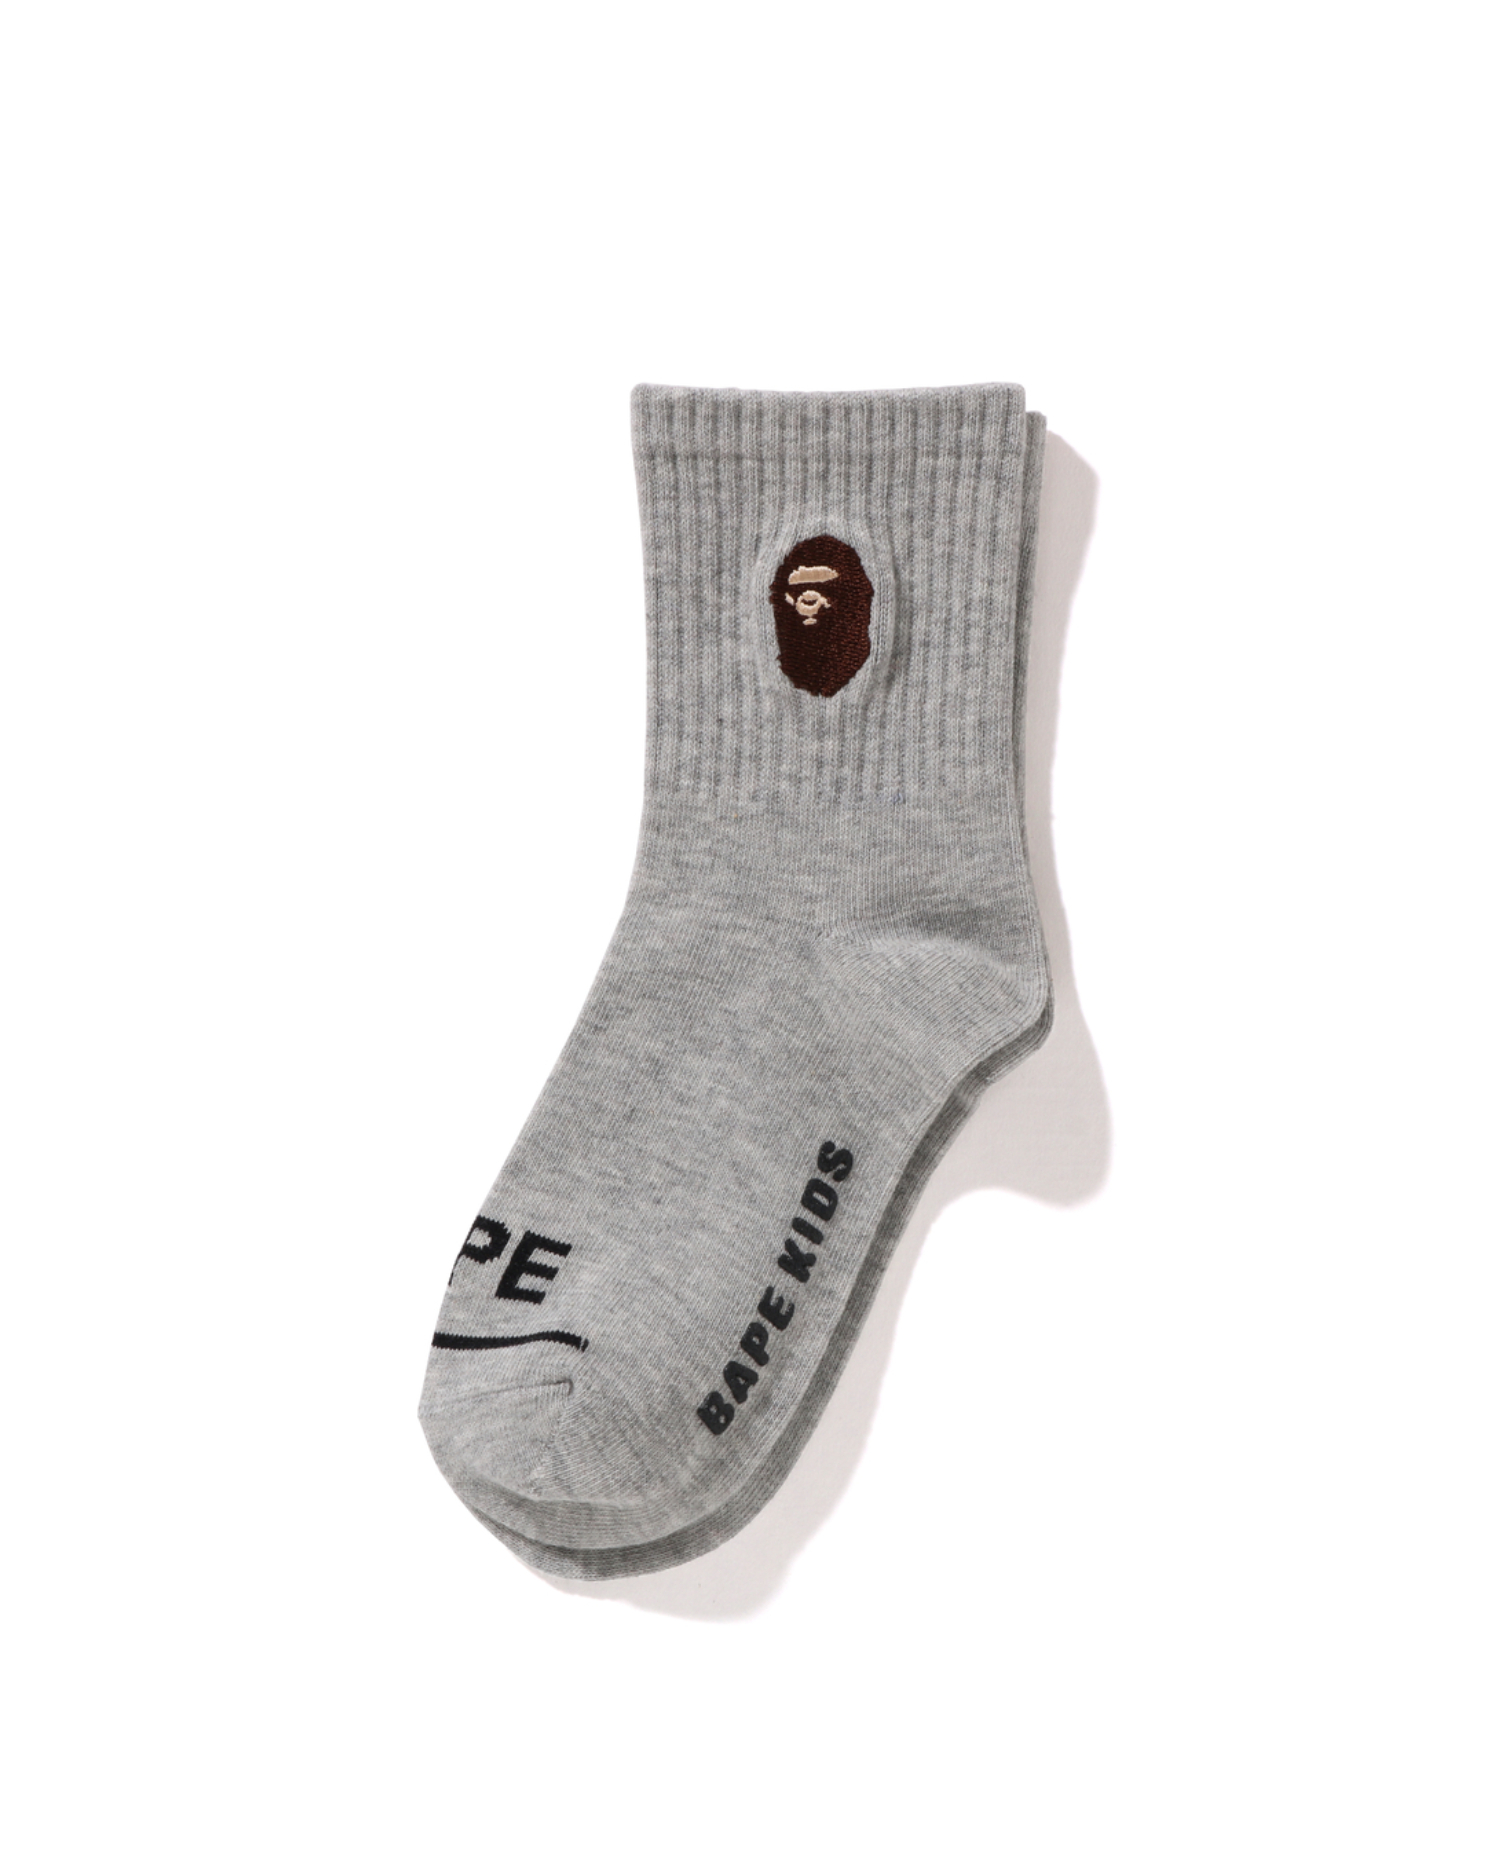 Shop Ape Head Ribbed Socks Online | BAPE